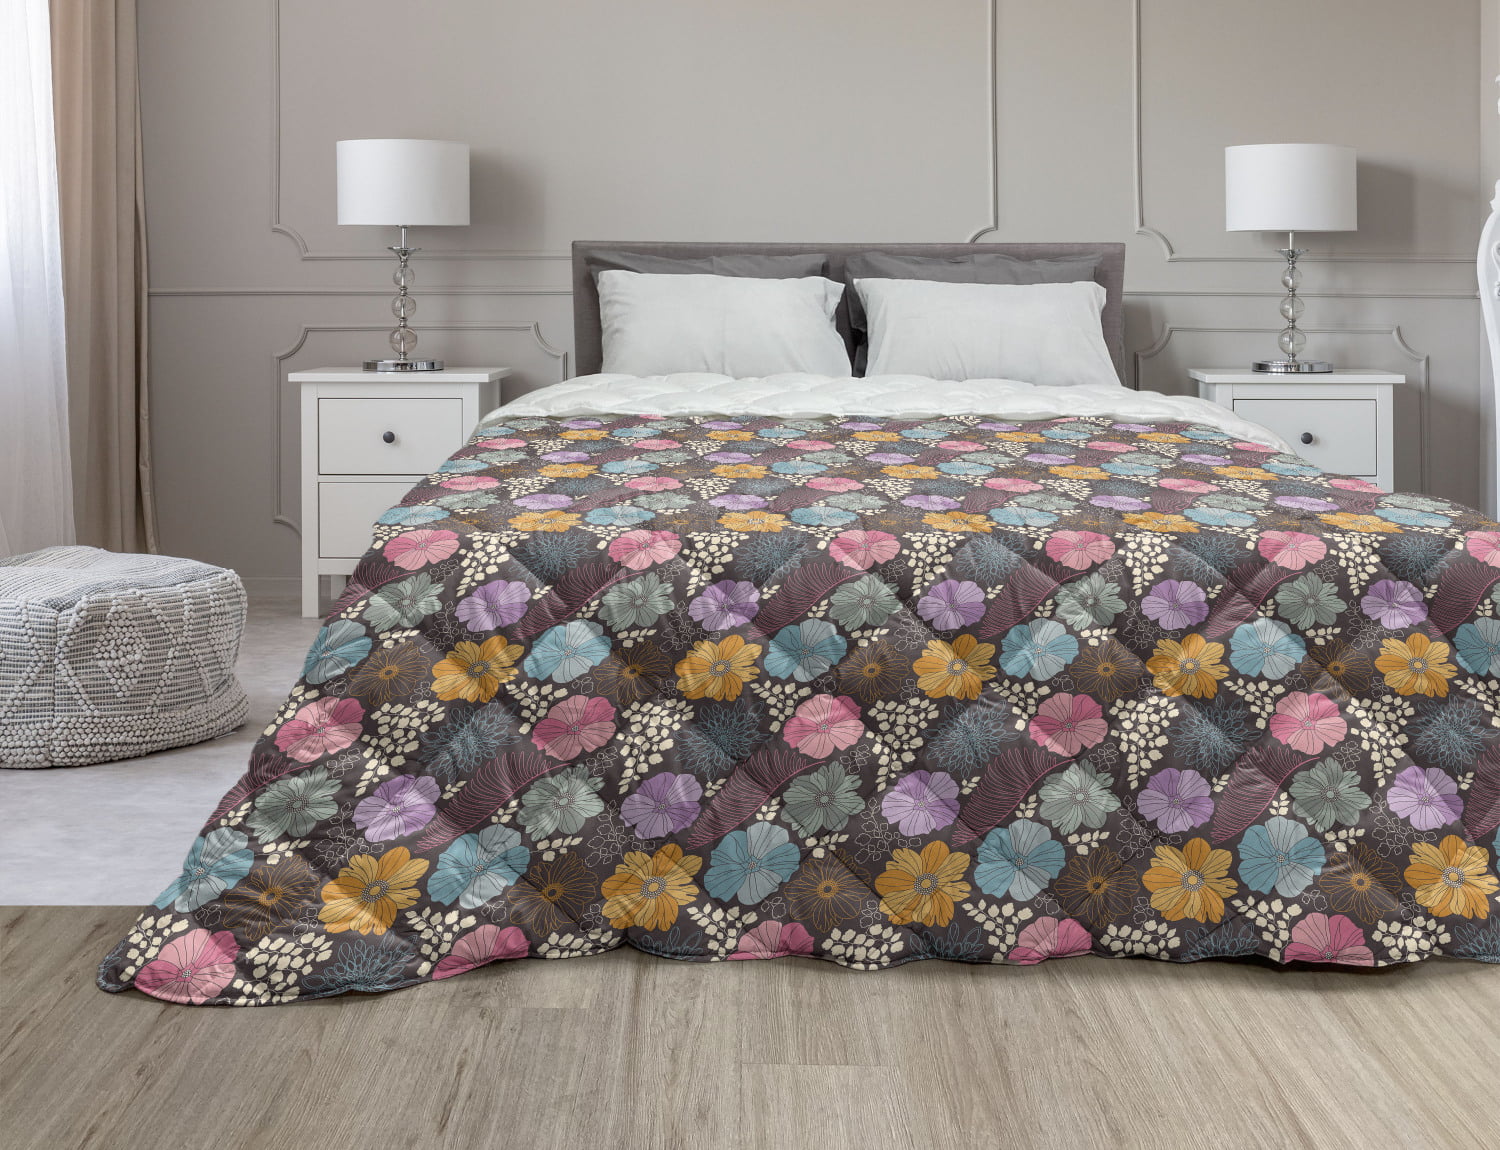 Details about   Ladybug  Reversible Cotton Quilt Set Coverlet Bedspreads 